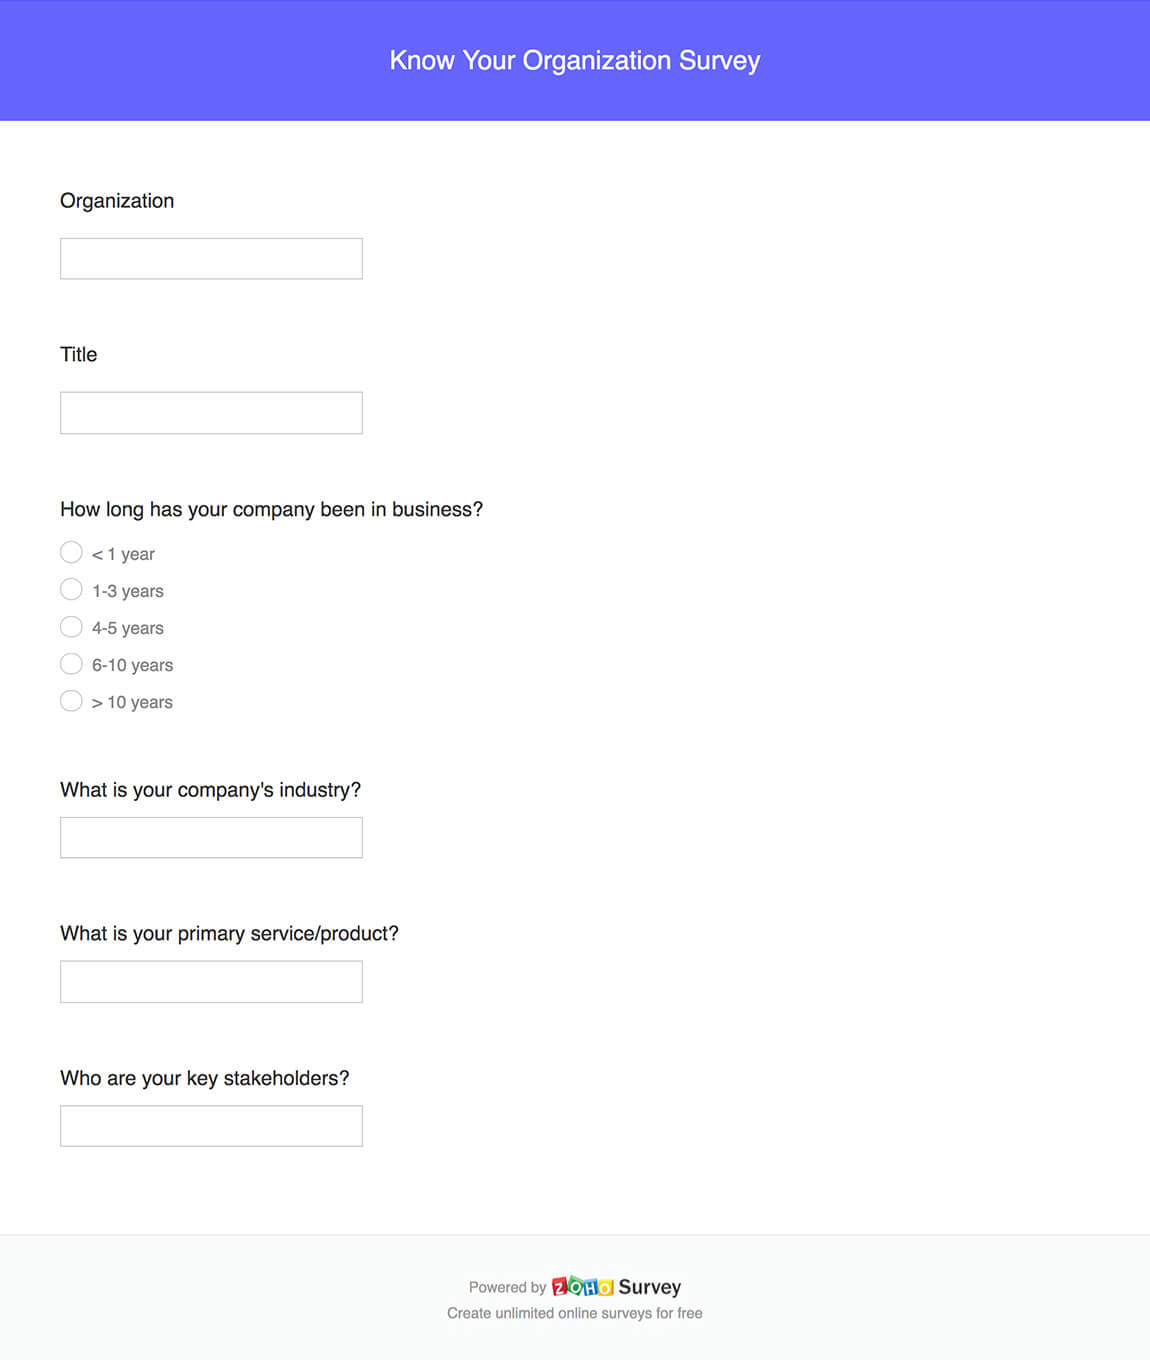 Know your organization survey questionnaire template